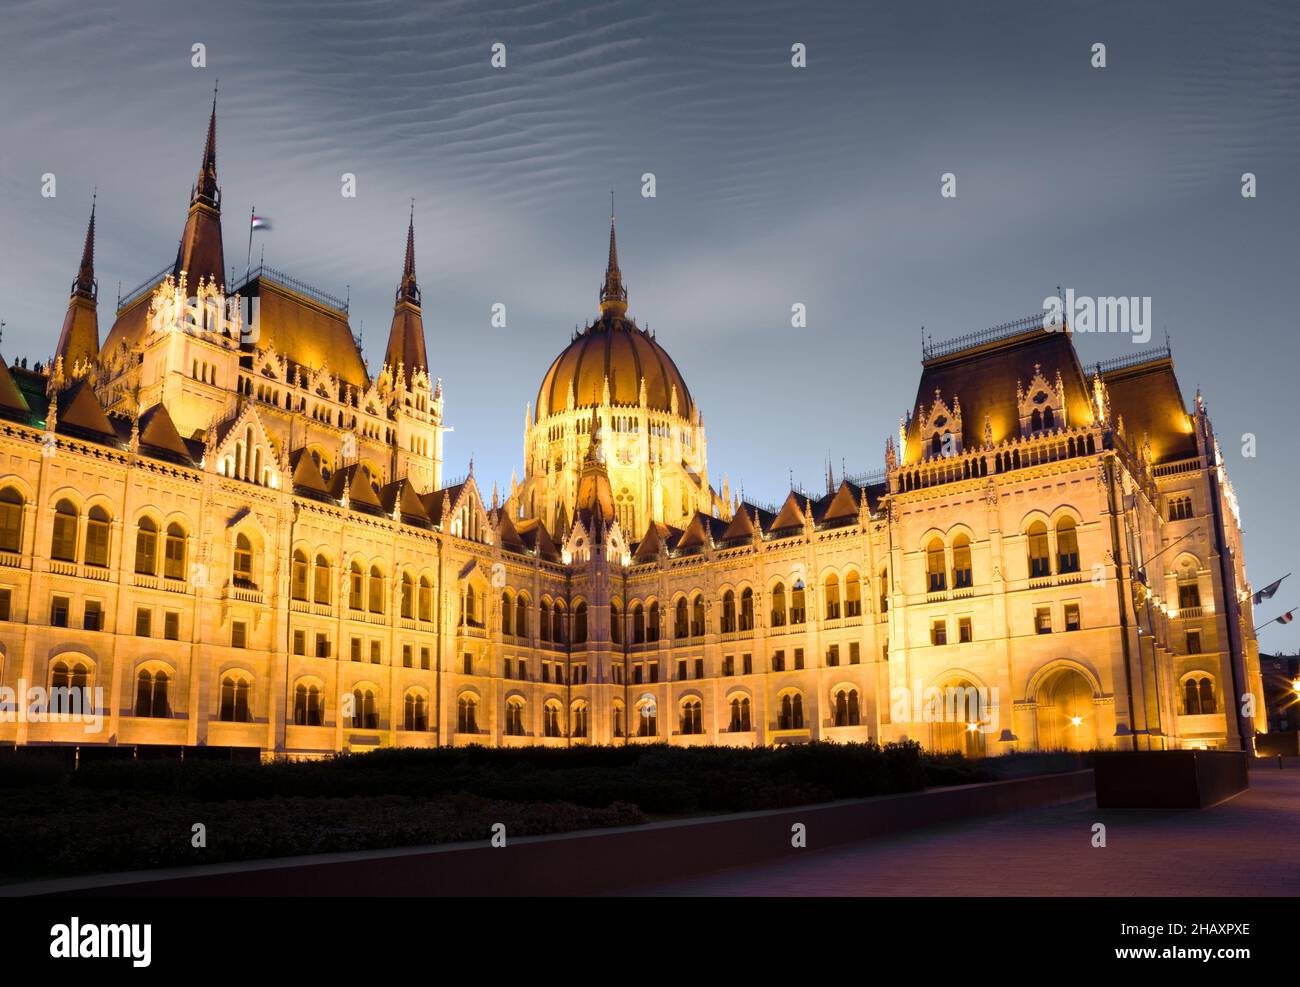 Illuminated Hungarian Parliament building at night Stock Photo